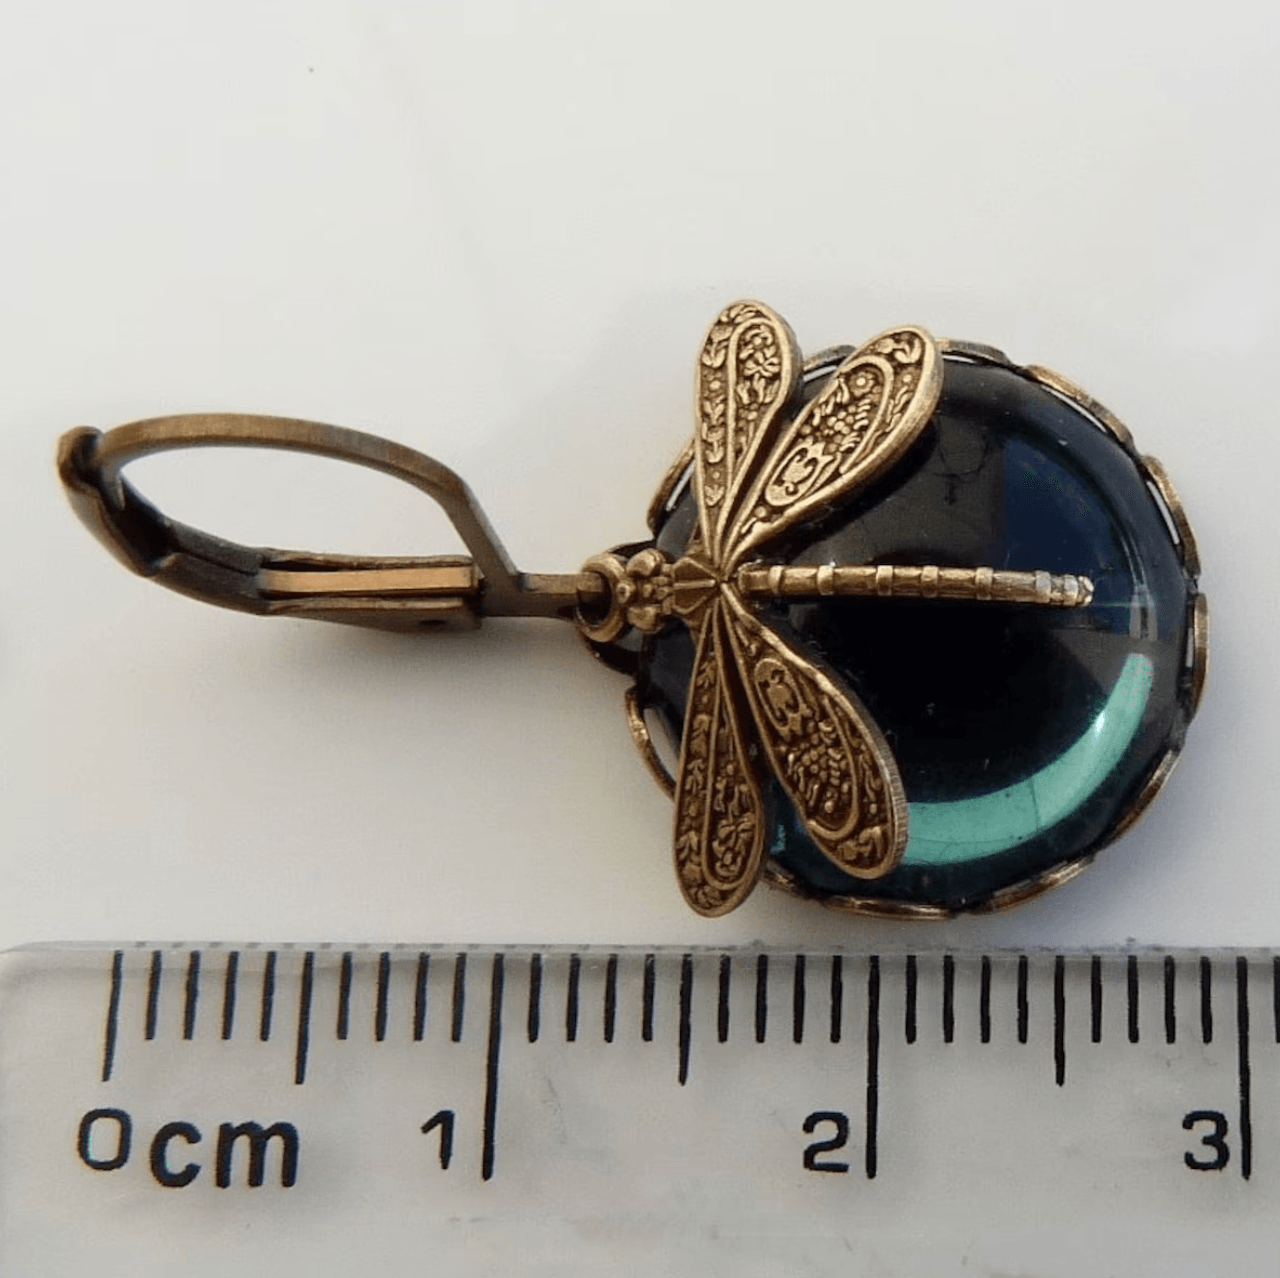 Vintage Dragonfly Jewelry Set